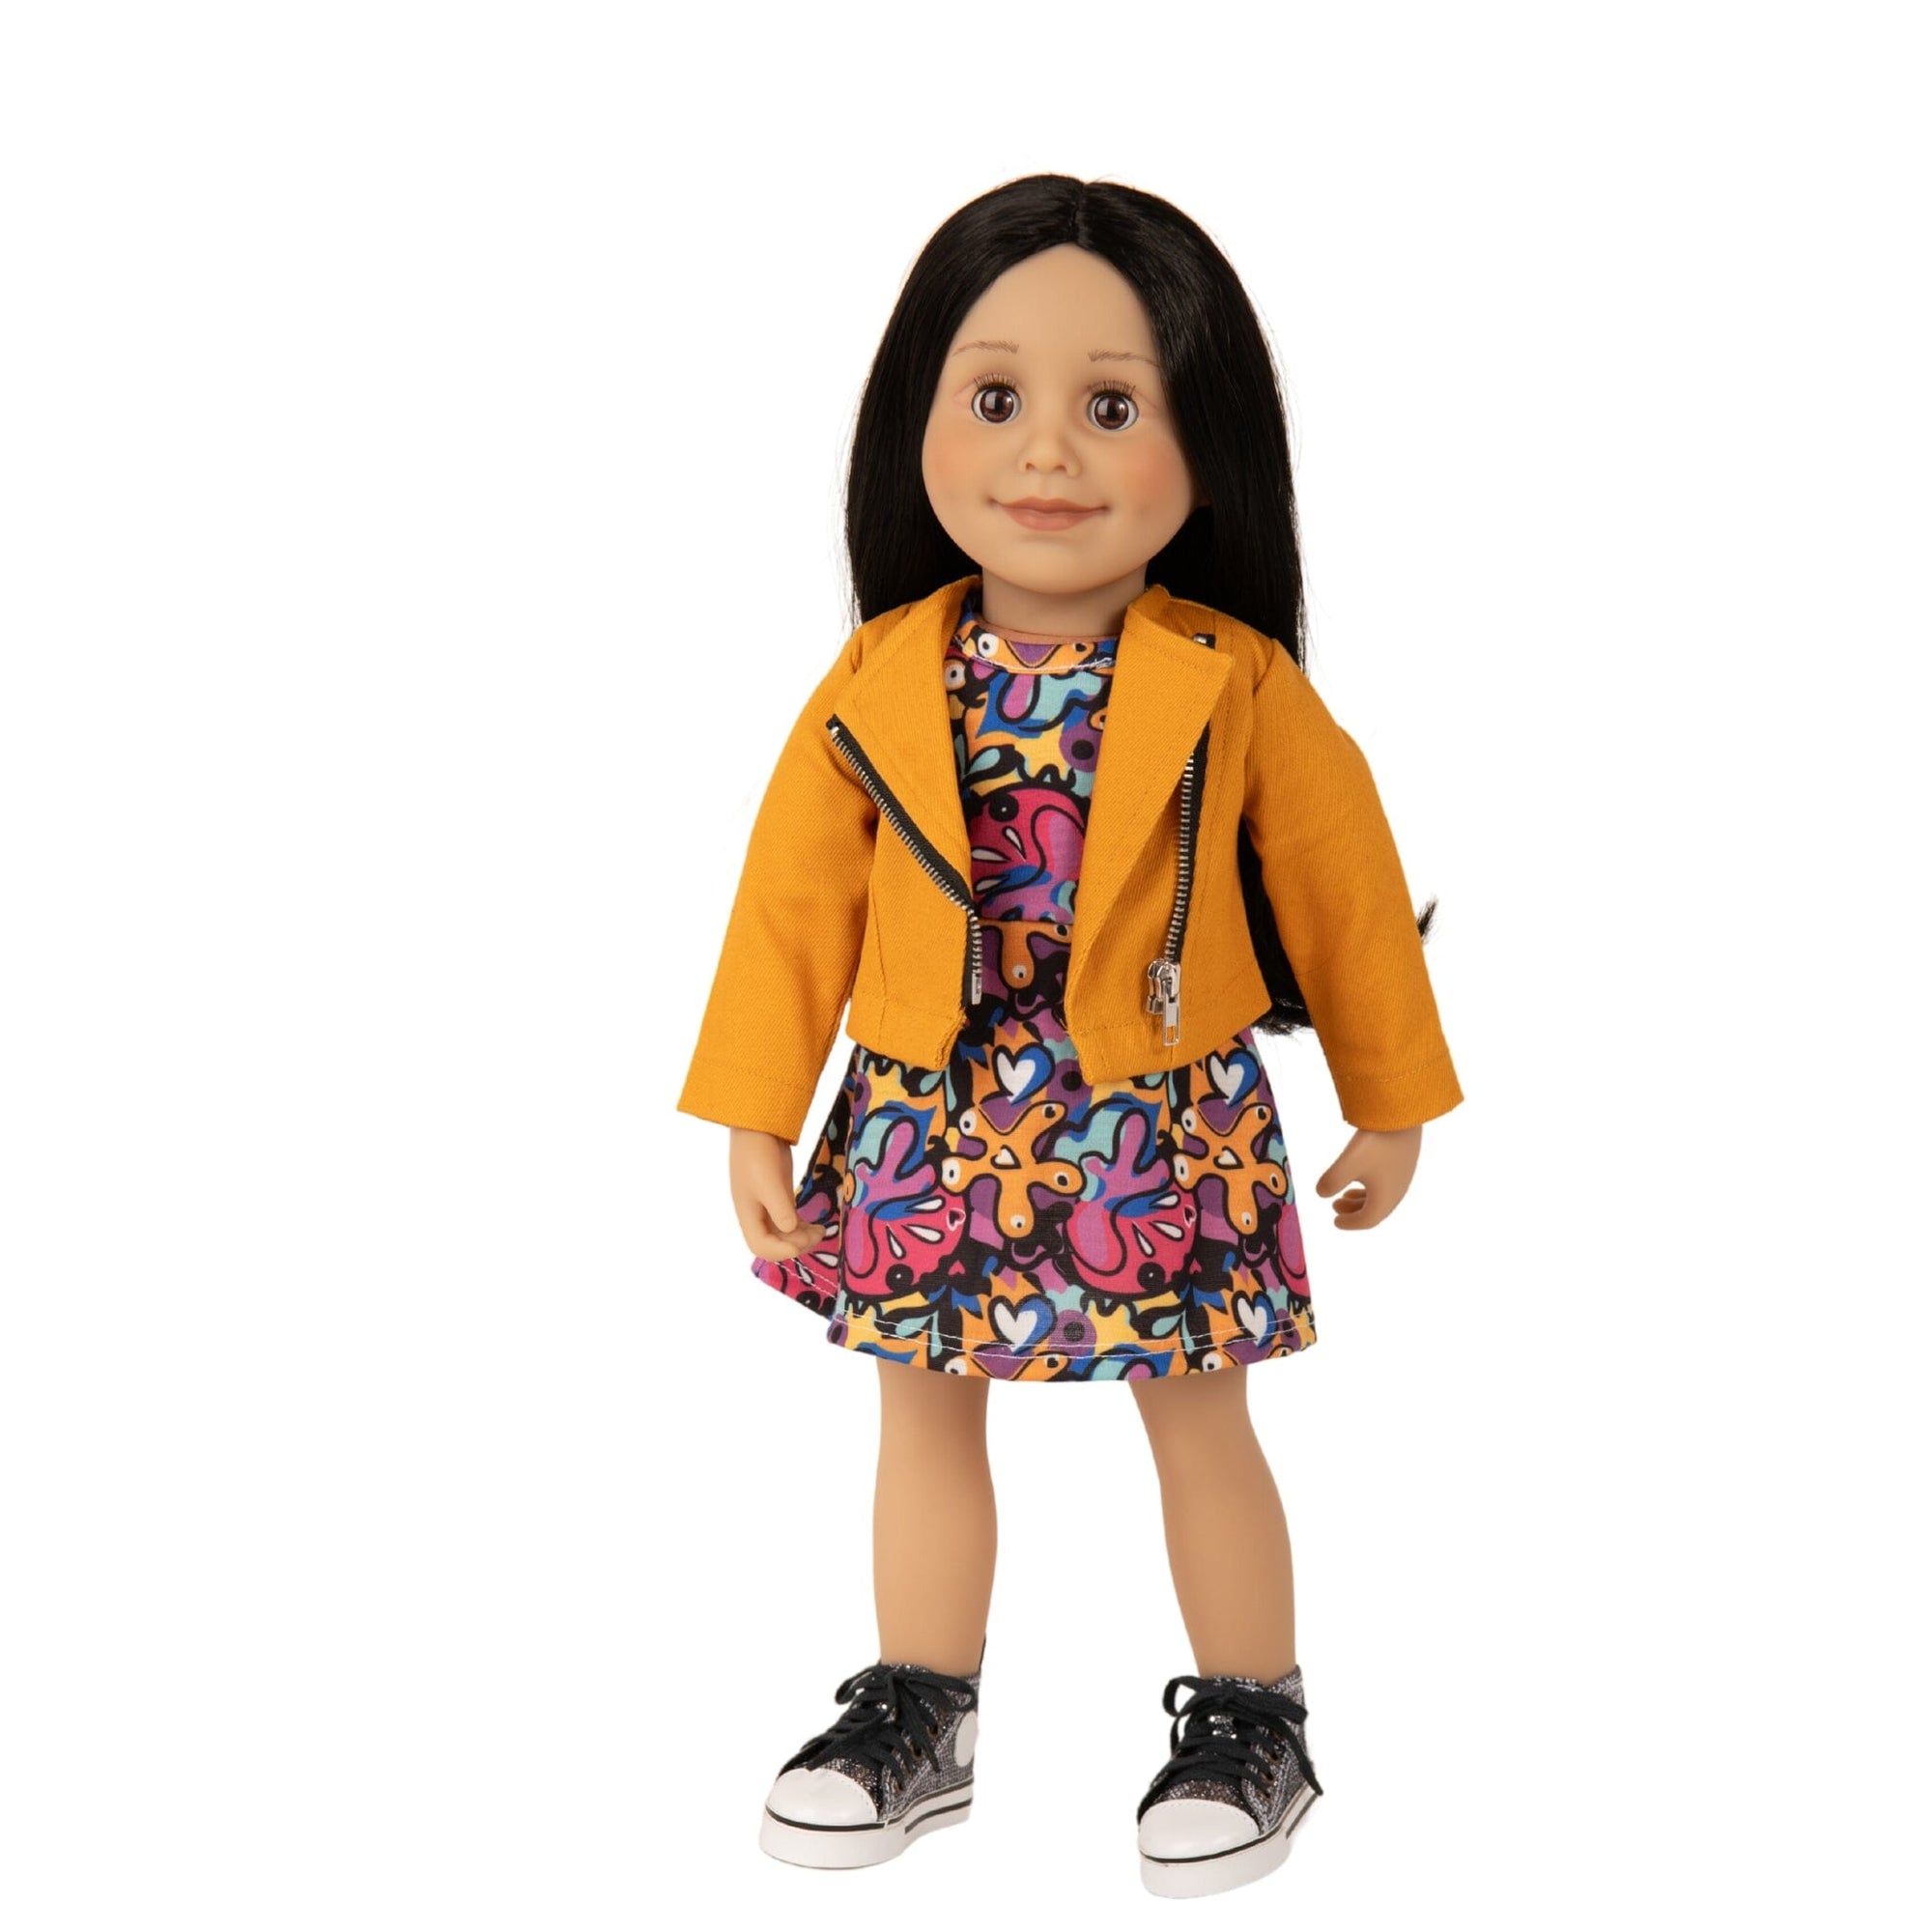 Maplelea Canadian Girl 18 inch doll Alexi from Toronto Ontario